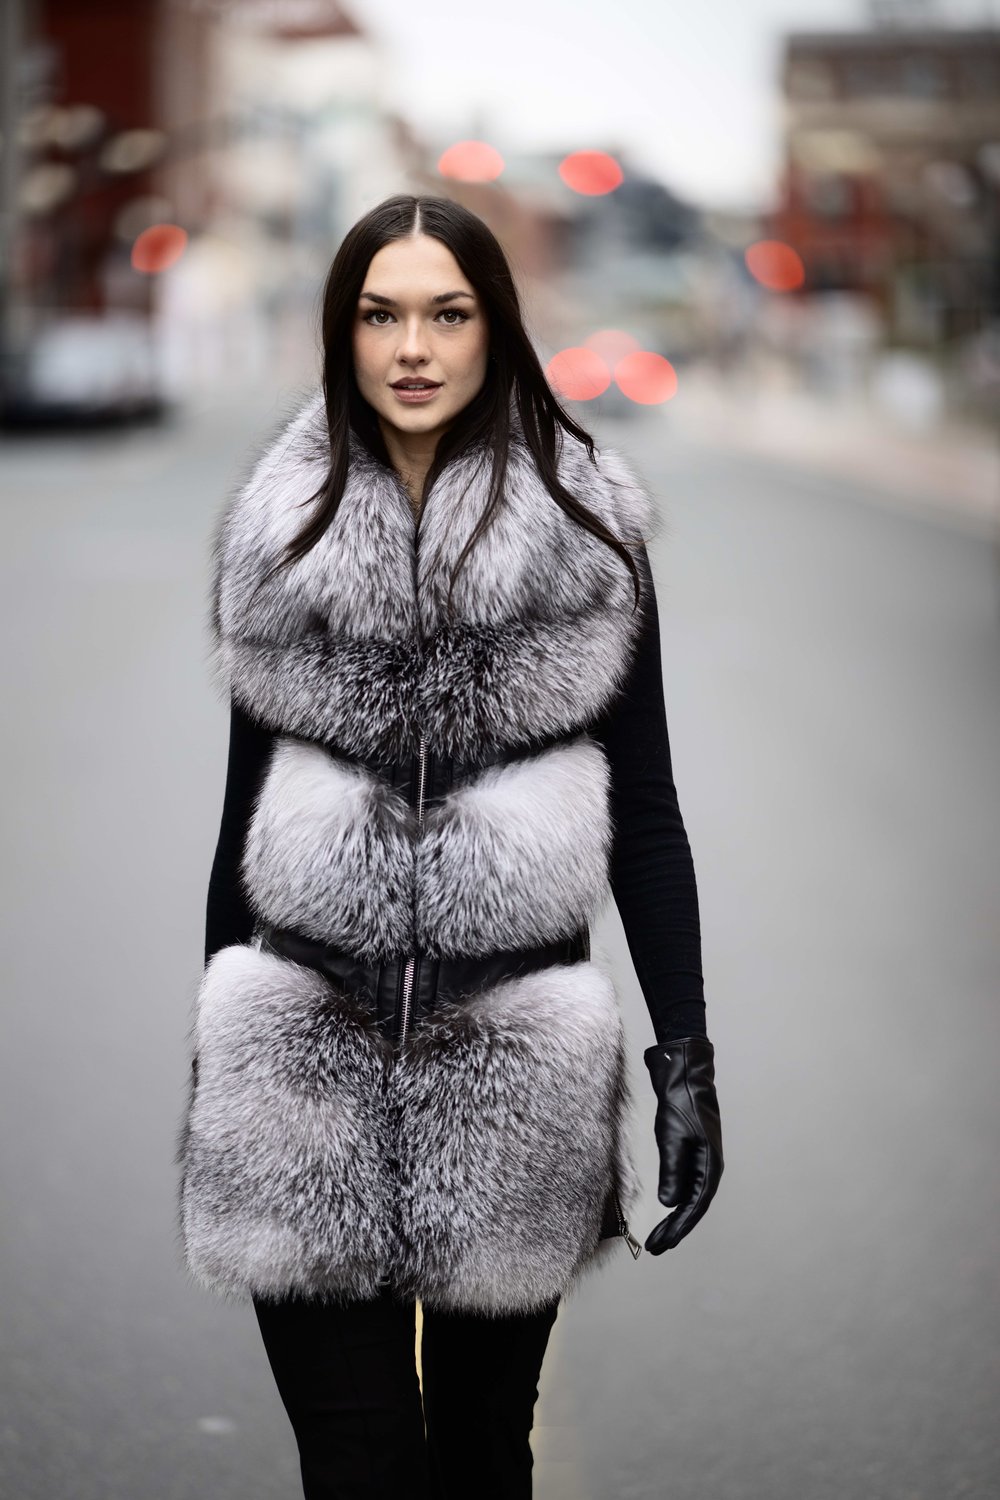 Long hair beaver jacket and mink insert – Wolfie Premium Outerwear